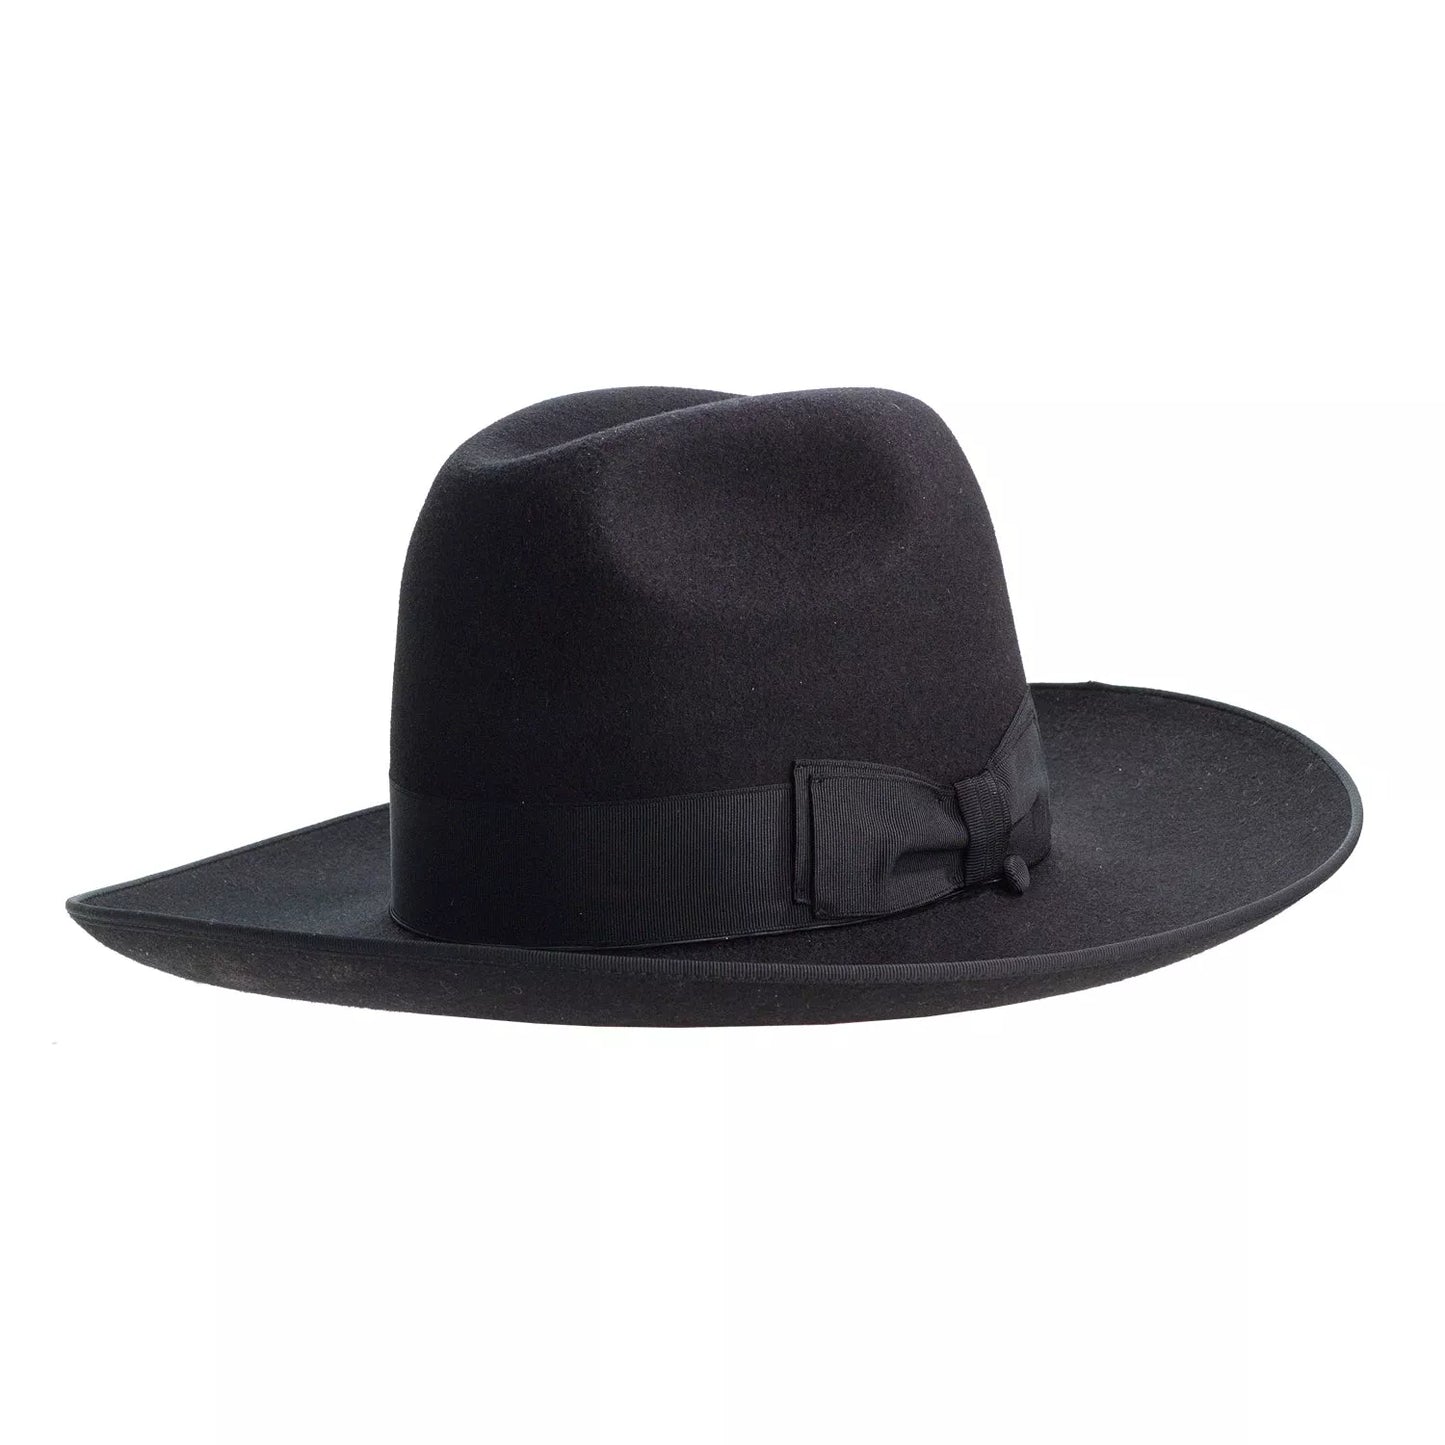 black ten gallon hat